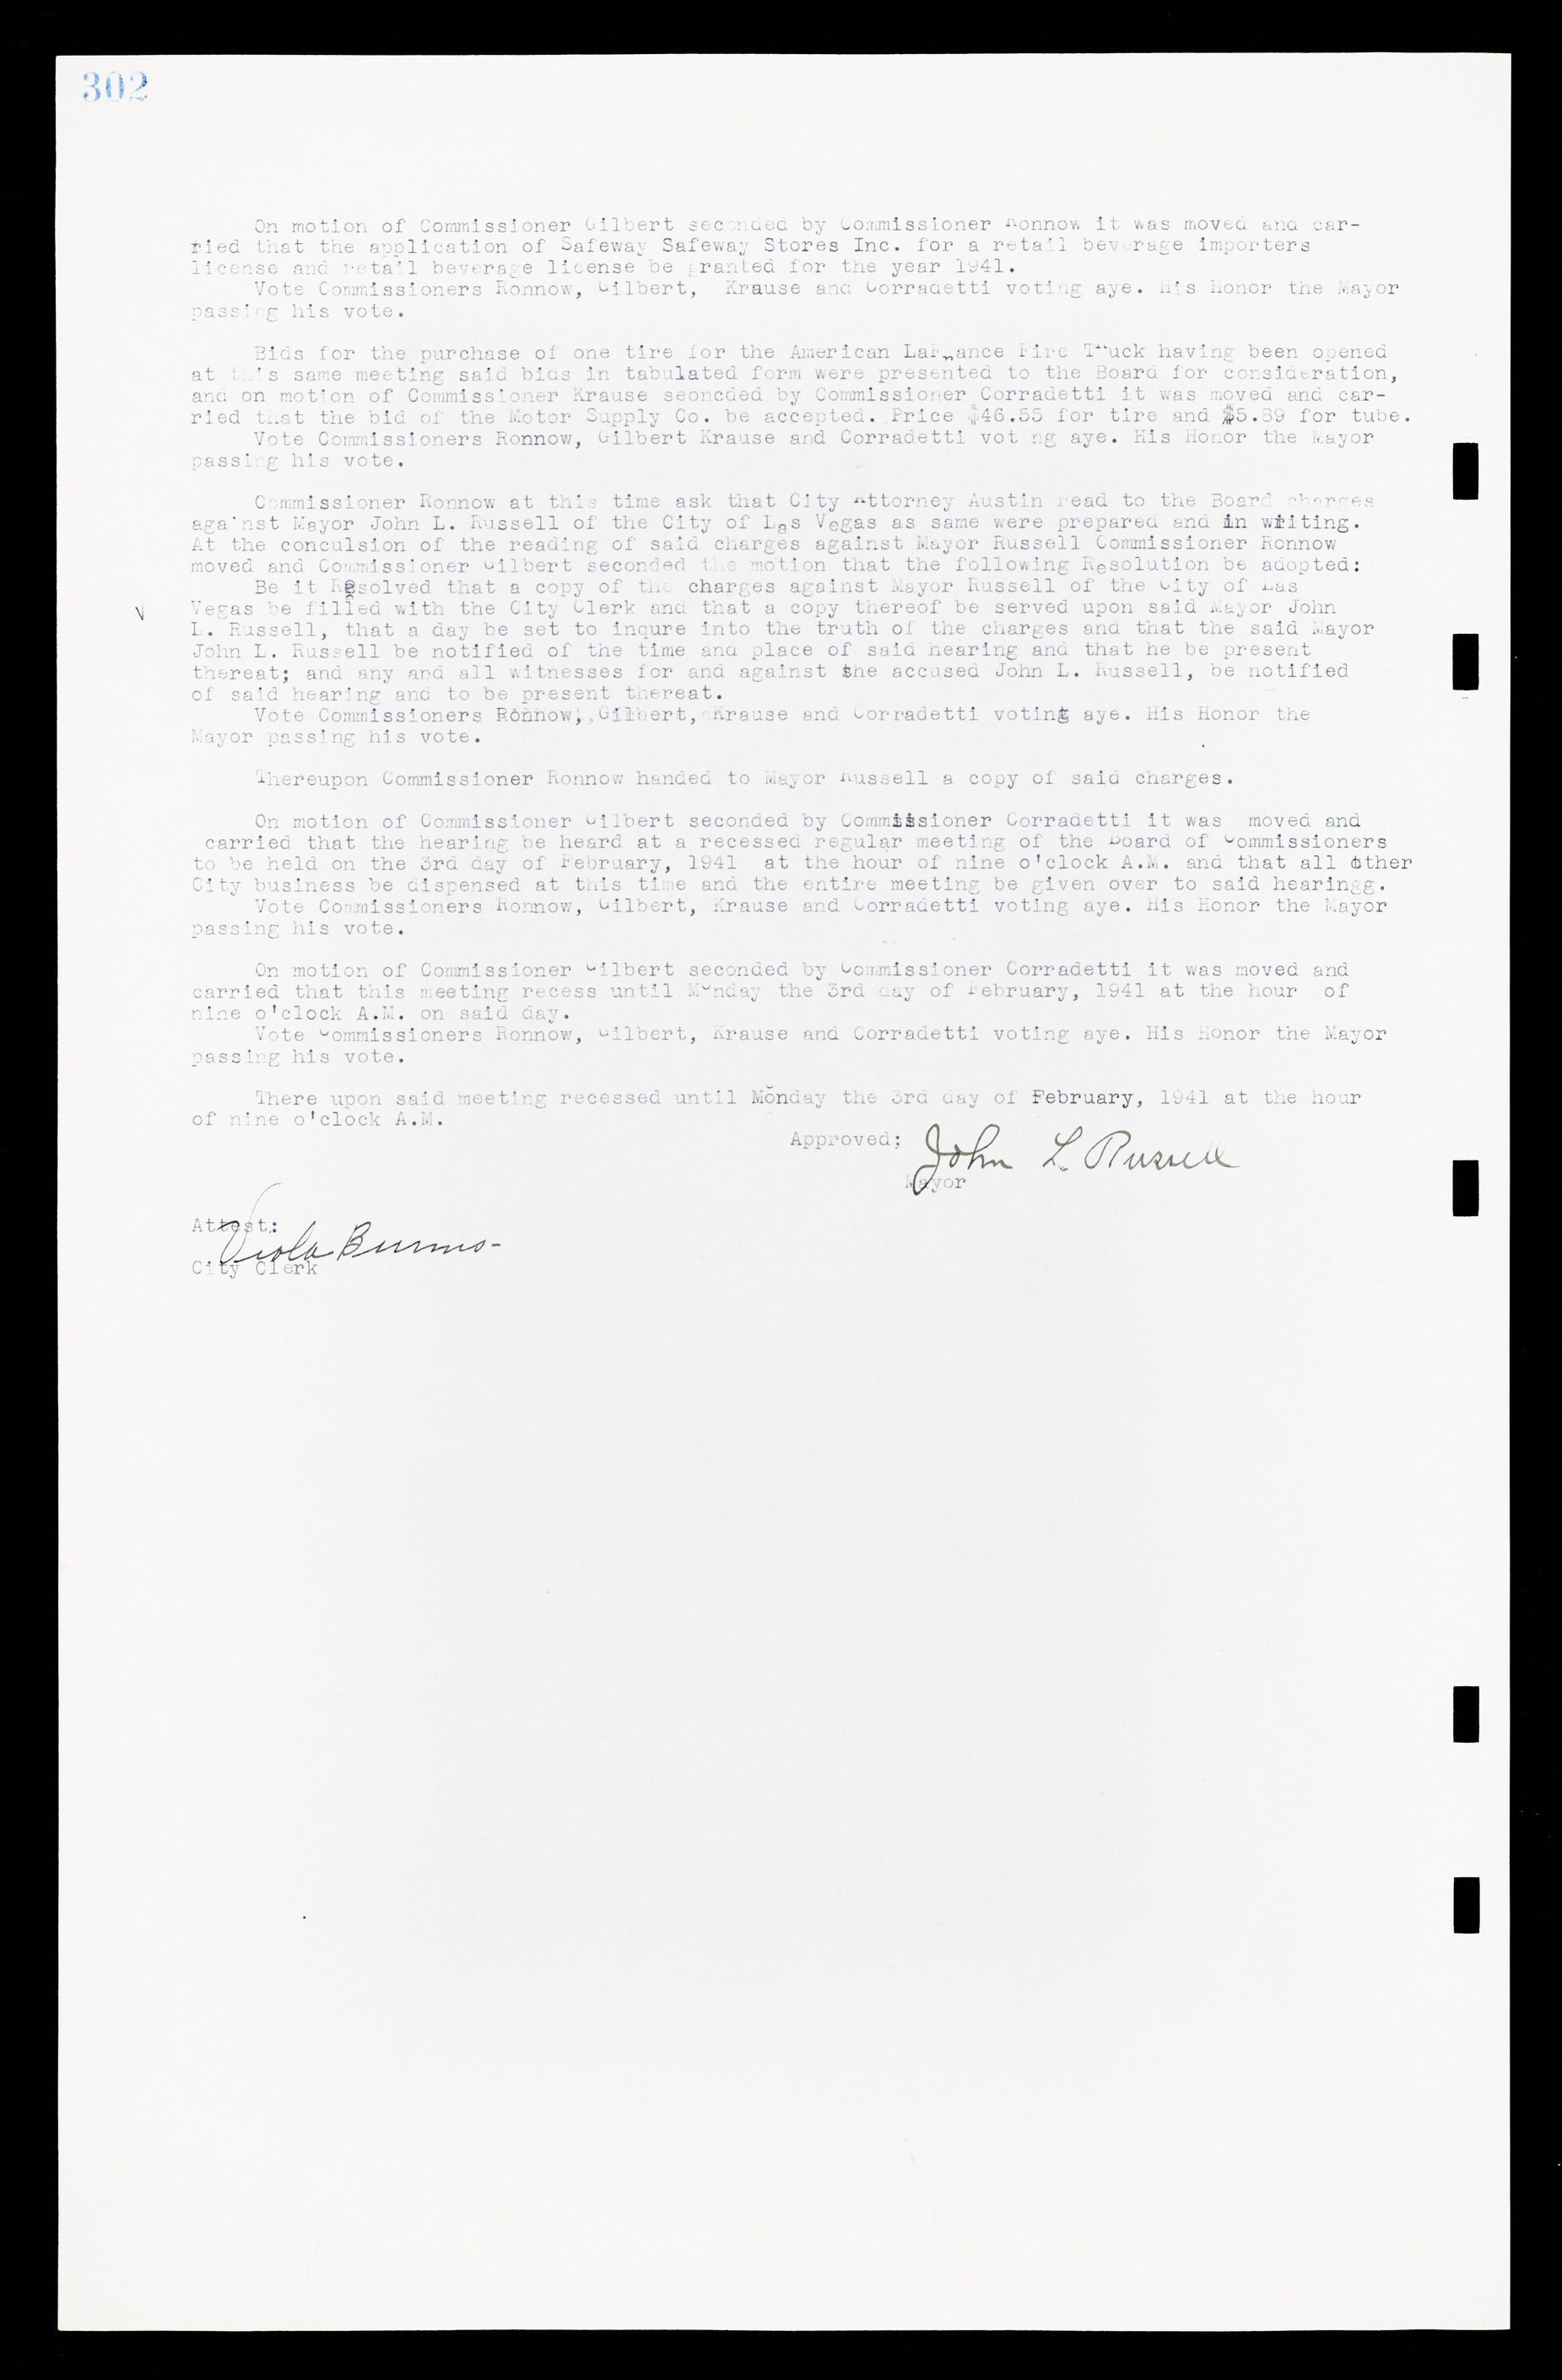 Las Vegas City Commission Minutes, February 17, 1937 to August 4, 1942, lvc000004-326